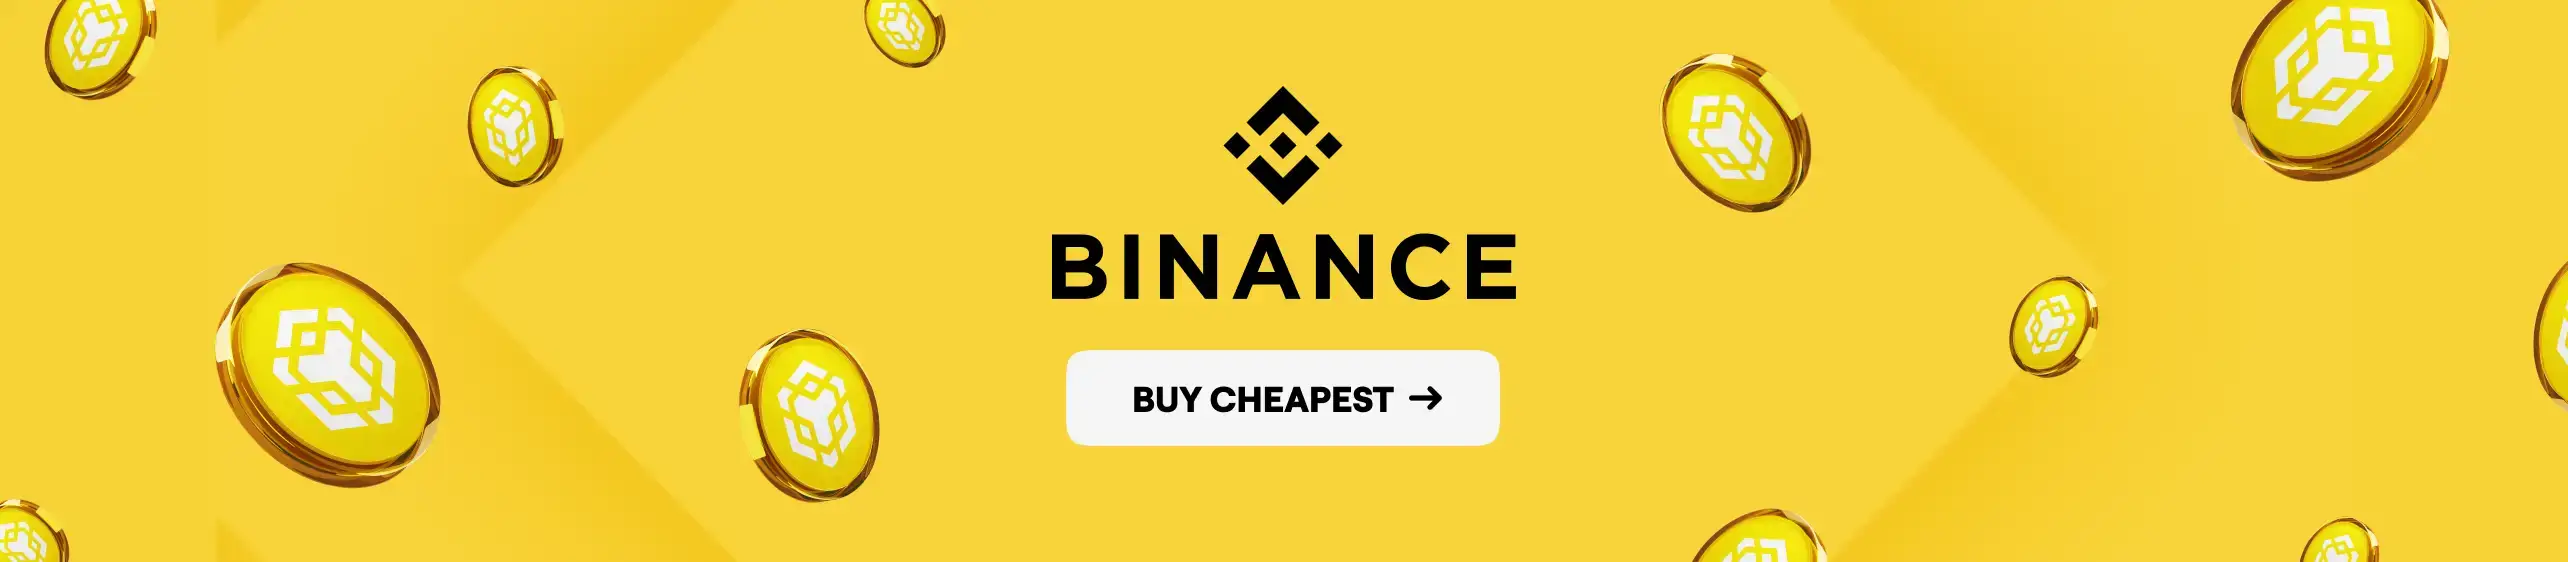 Binance - Giftcard - web